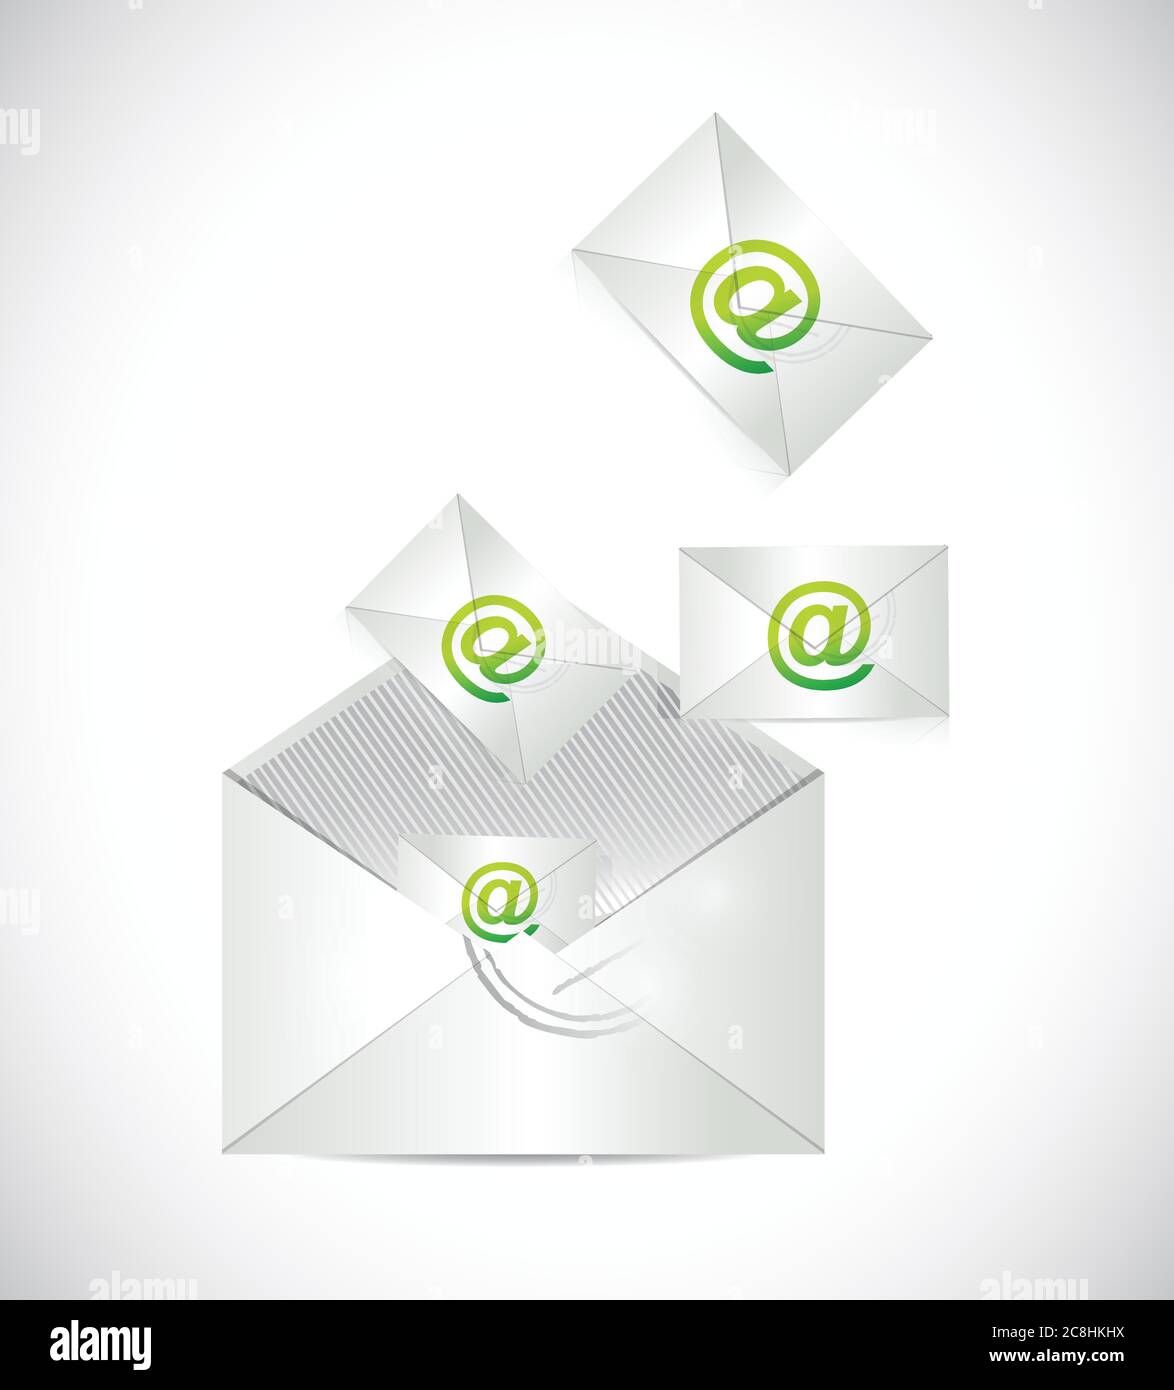 Envelope full of emails illustration design over a white background Stock Vector